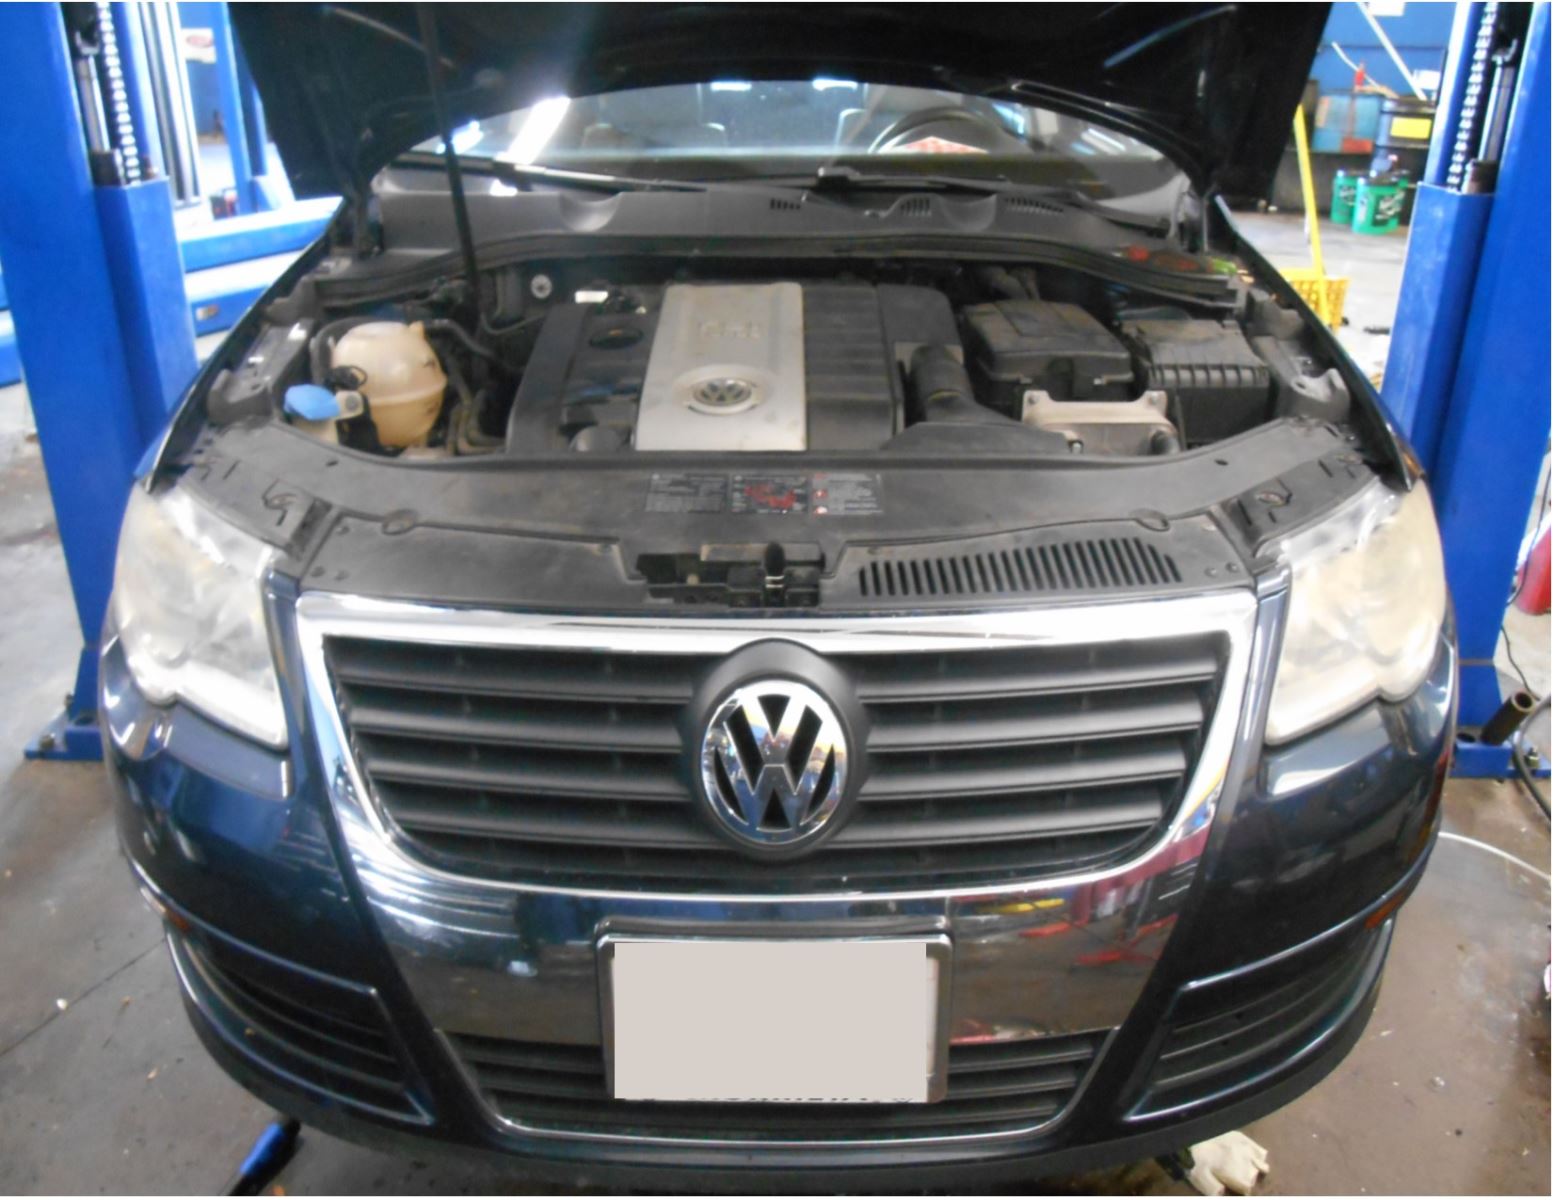 VW | Volkswagen oil change, oil leak repair in Temecula and Murrieta Ca